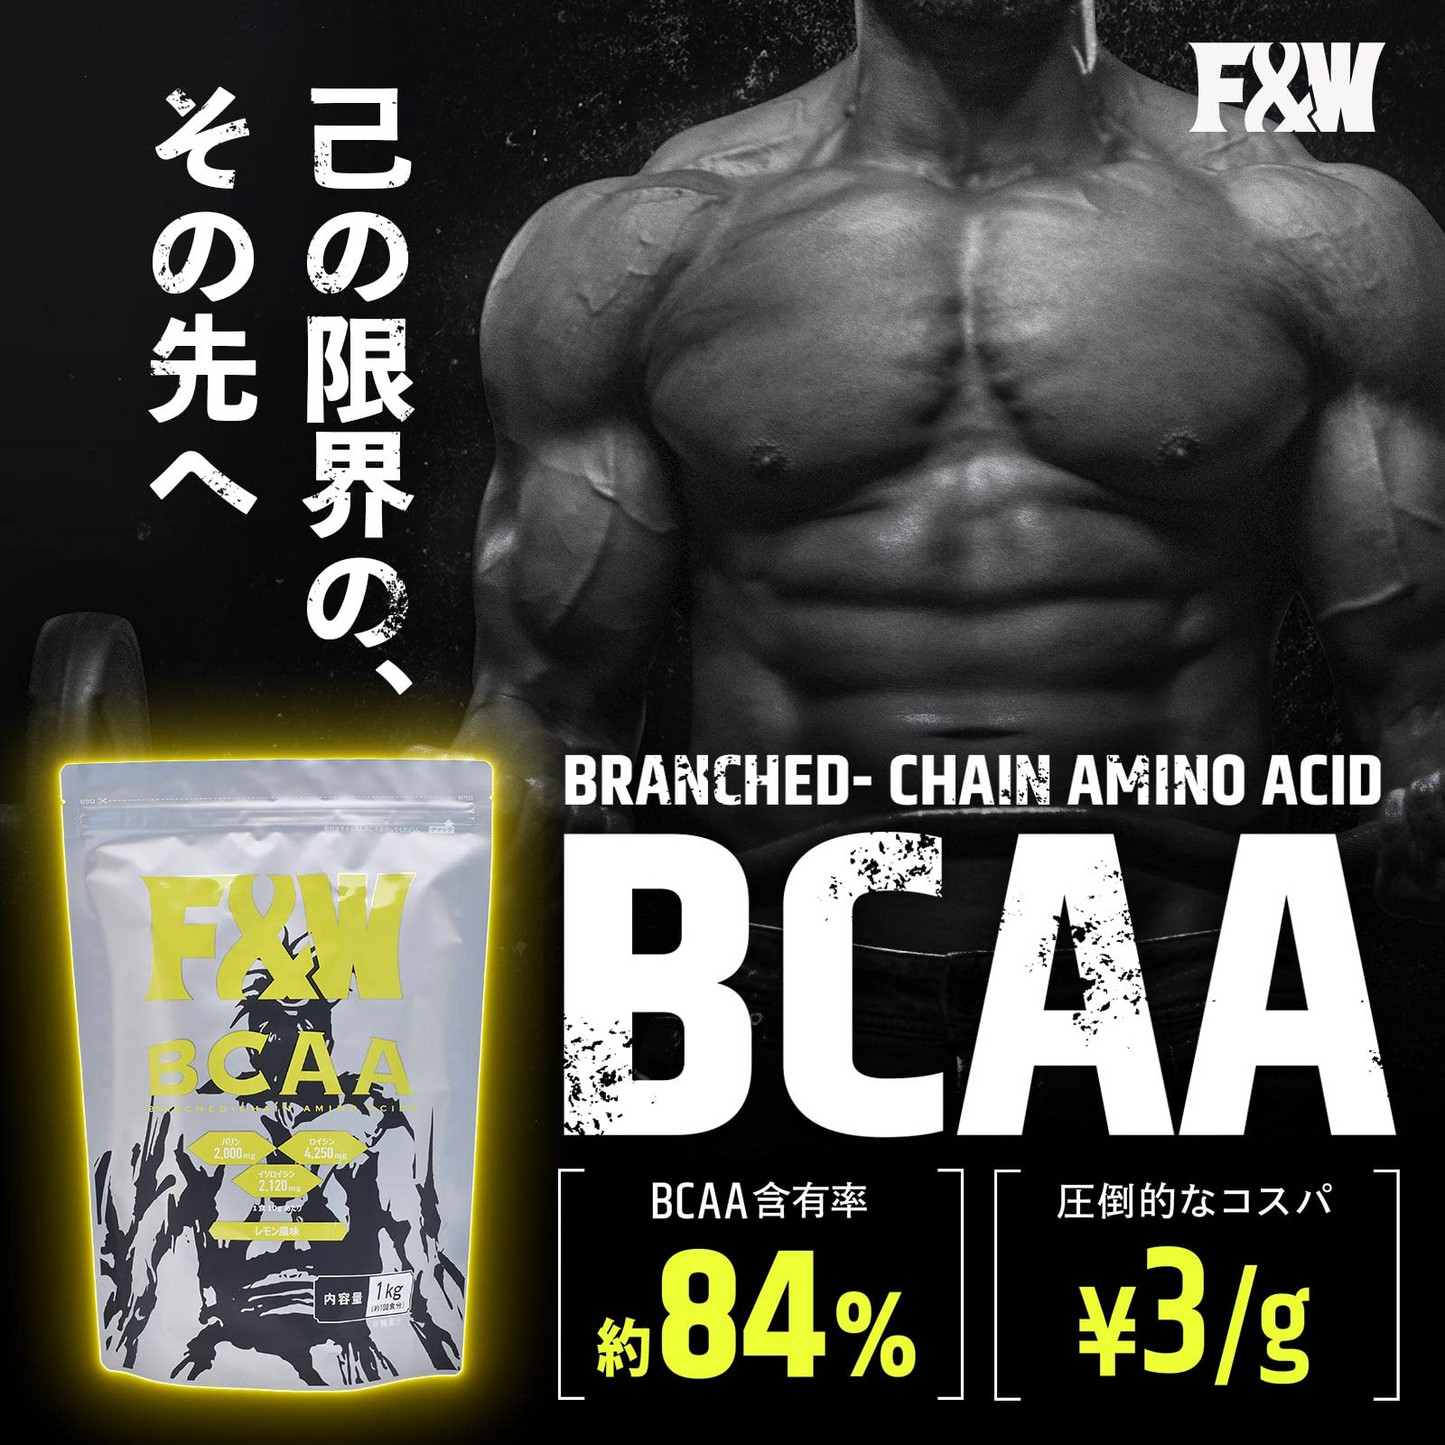 BCAA レモン風味 1kg×12個